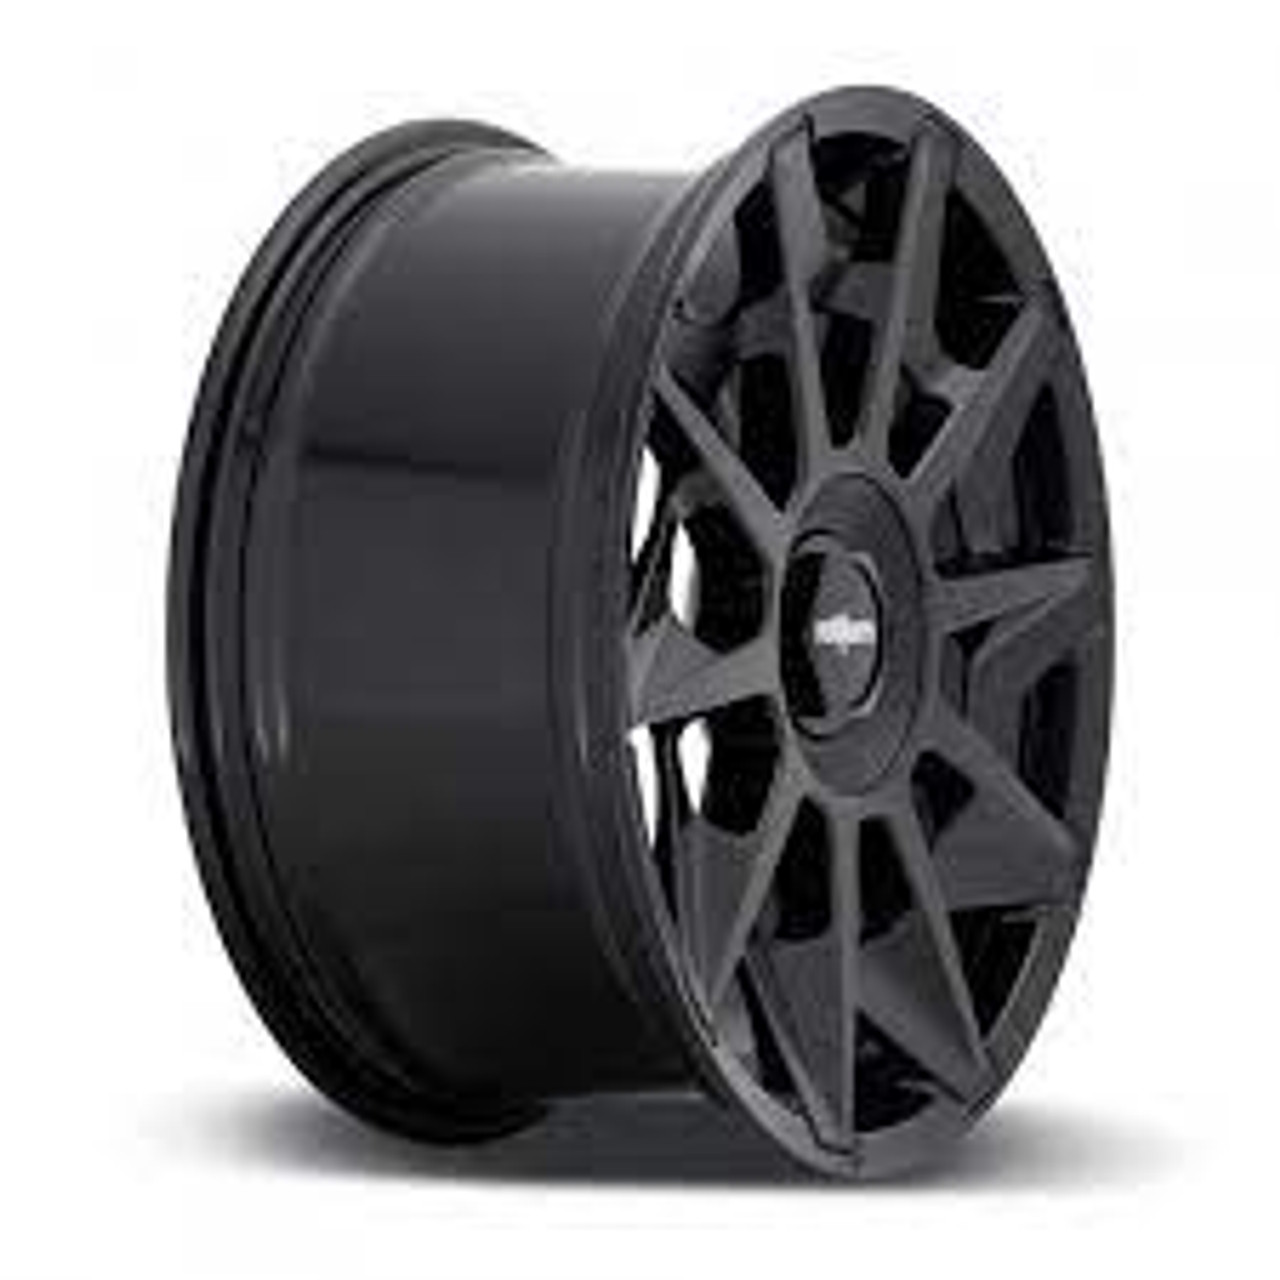 Rotiform R129 CVT Wheel 19x8.5 5x100/5x112 45 Offset - Matte Black